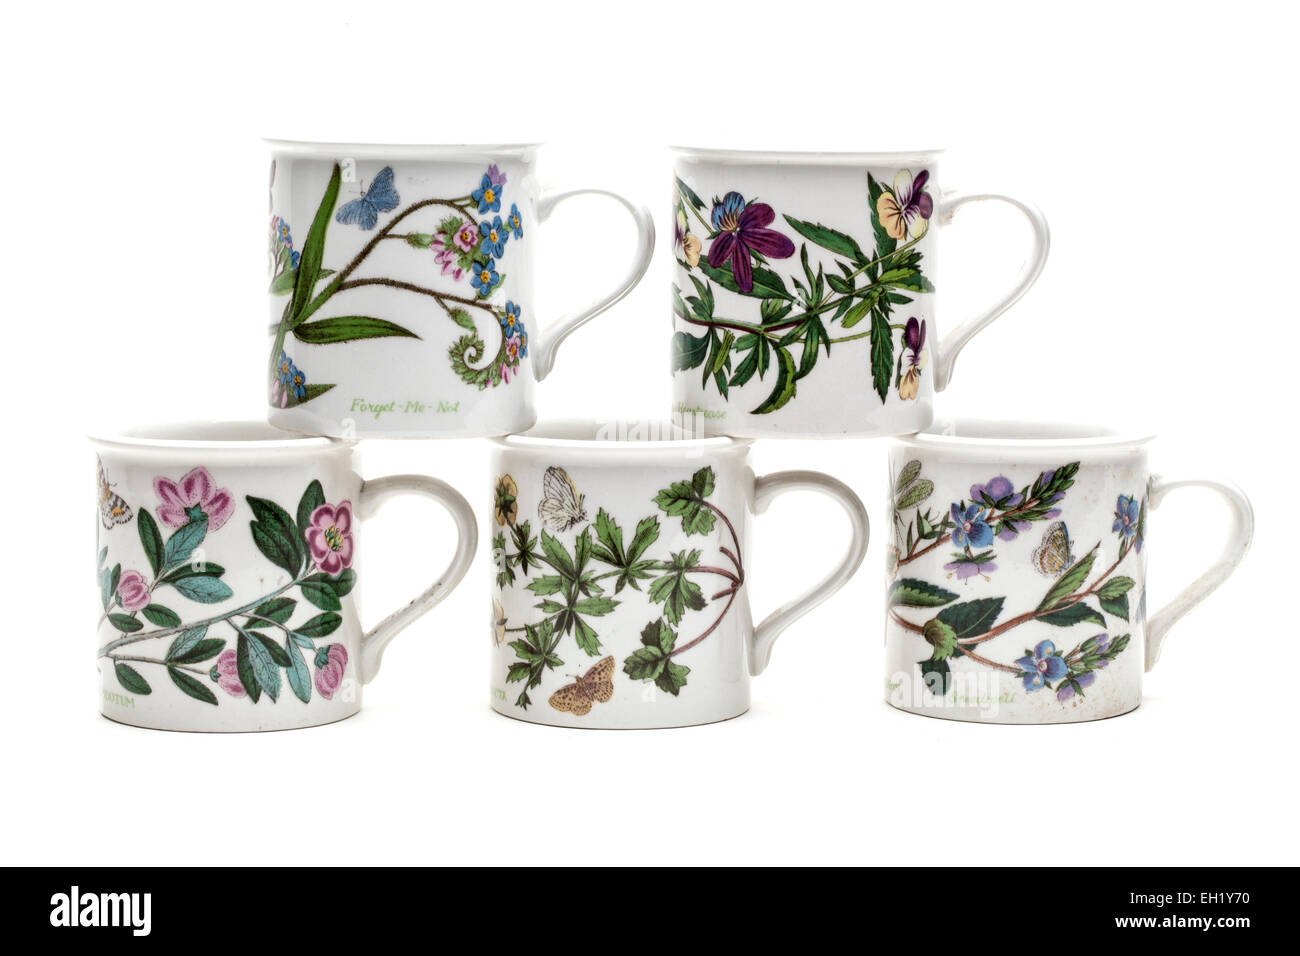 5 Portmeirion Botanic Garden Small Coffer Cups / Mugs Stock Photo